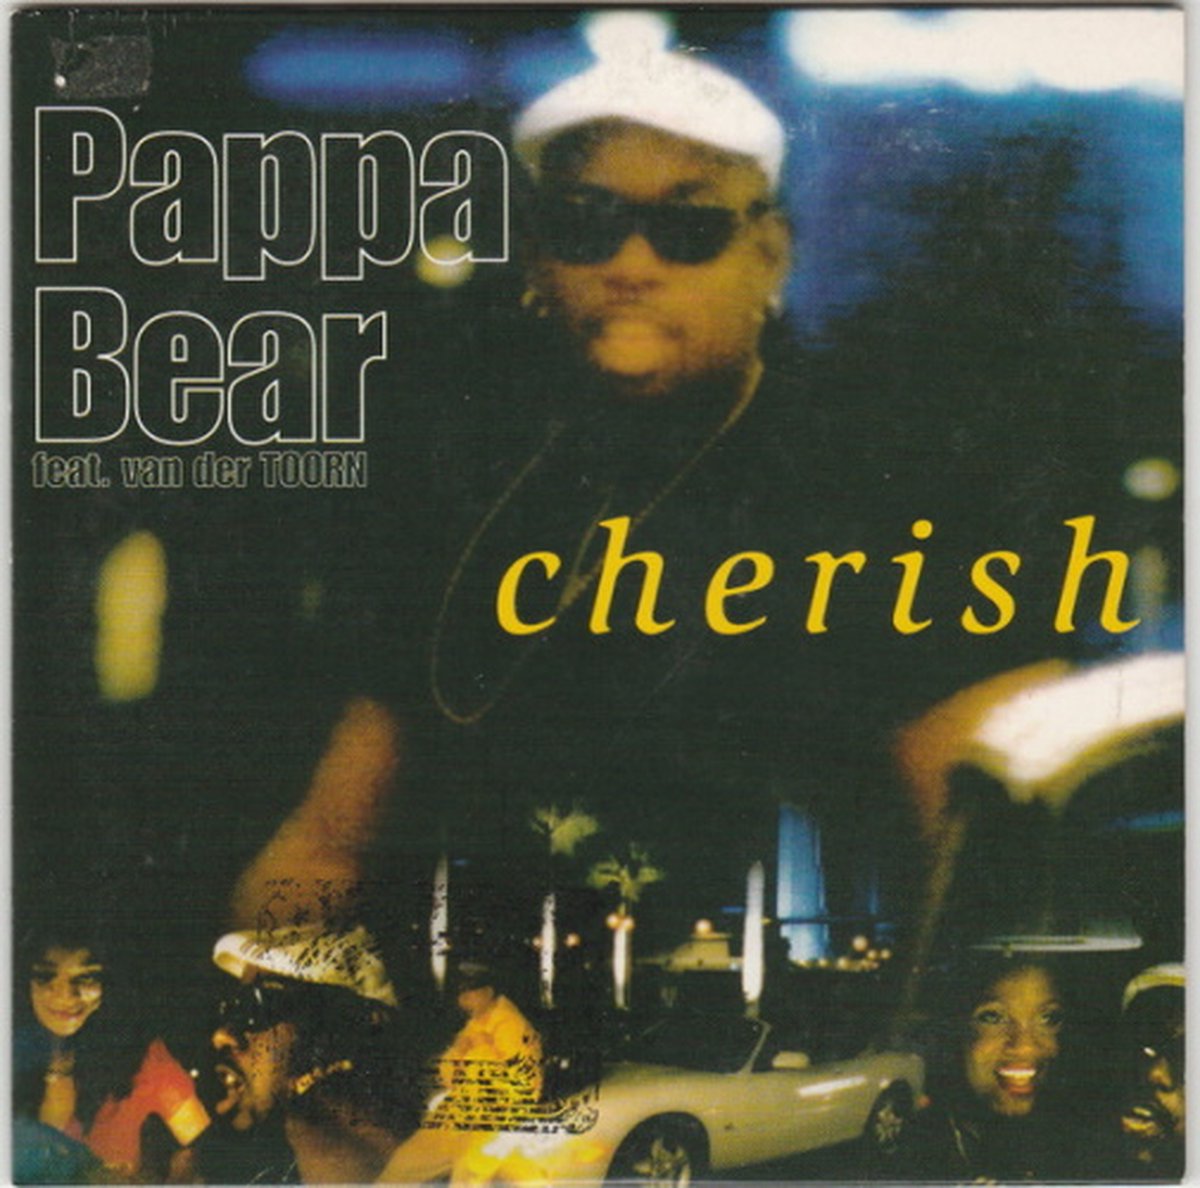 Cherish - Pappa Bear feat. van der Toorn